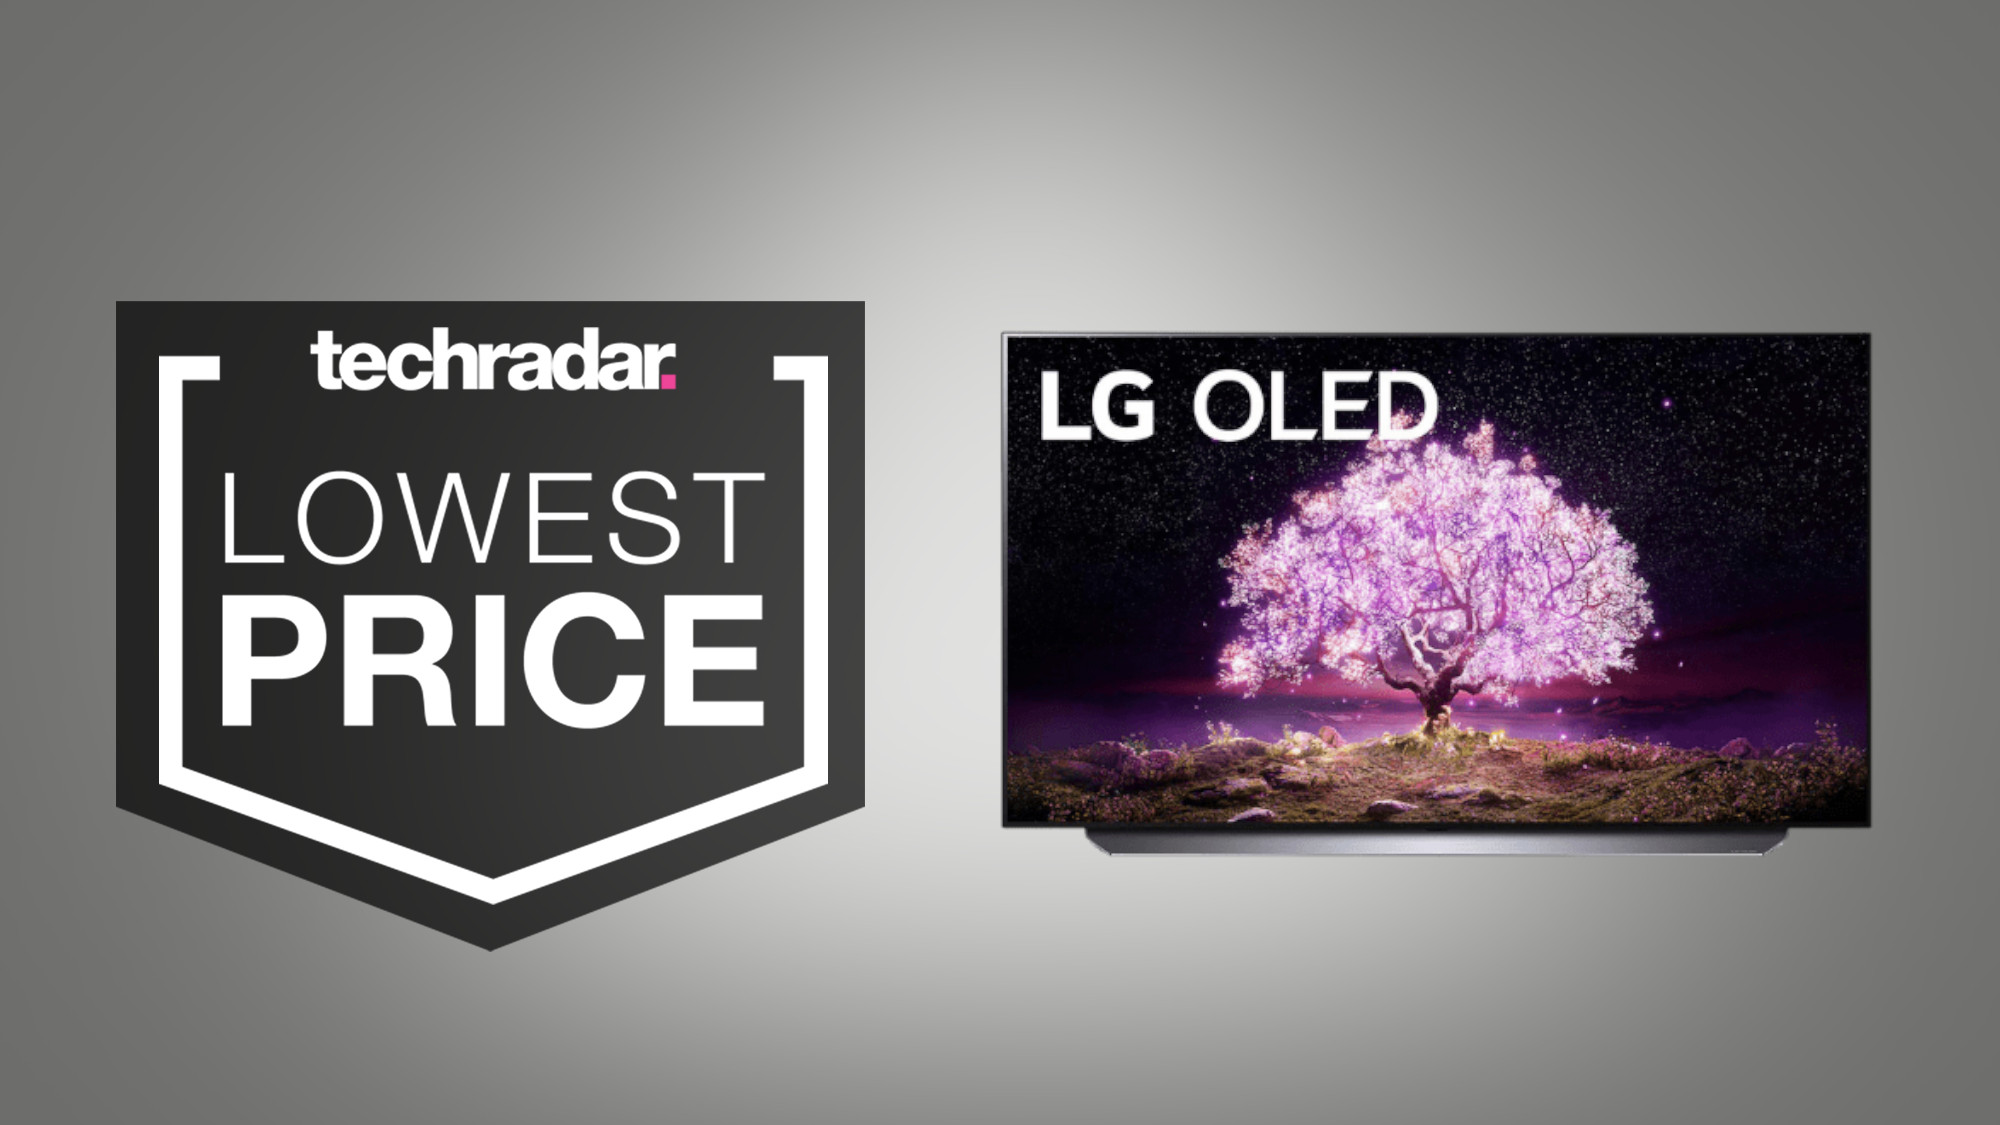 Offers image: LG C1 OLED TV on gray background